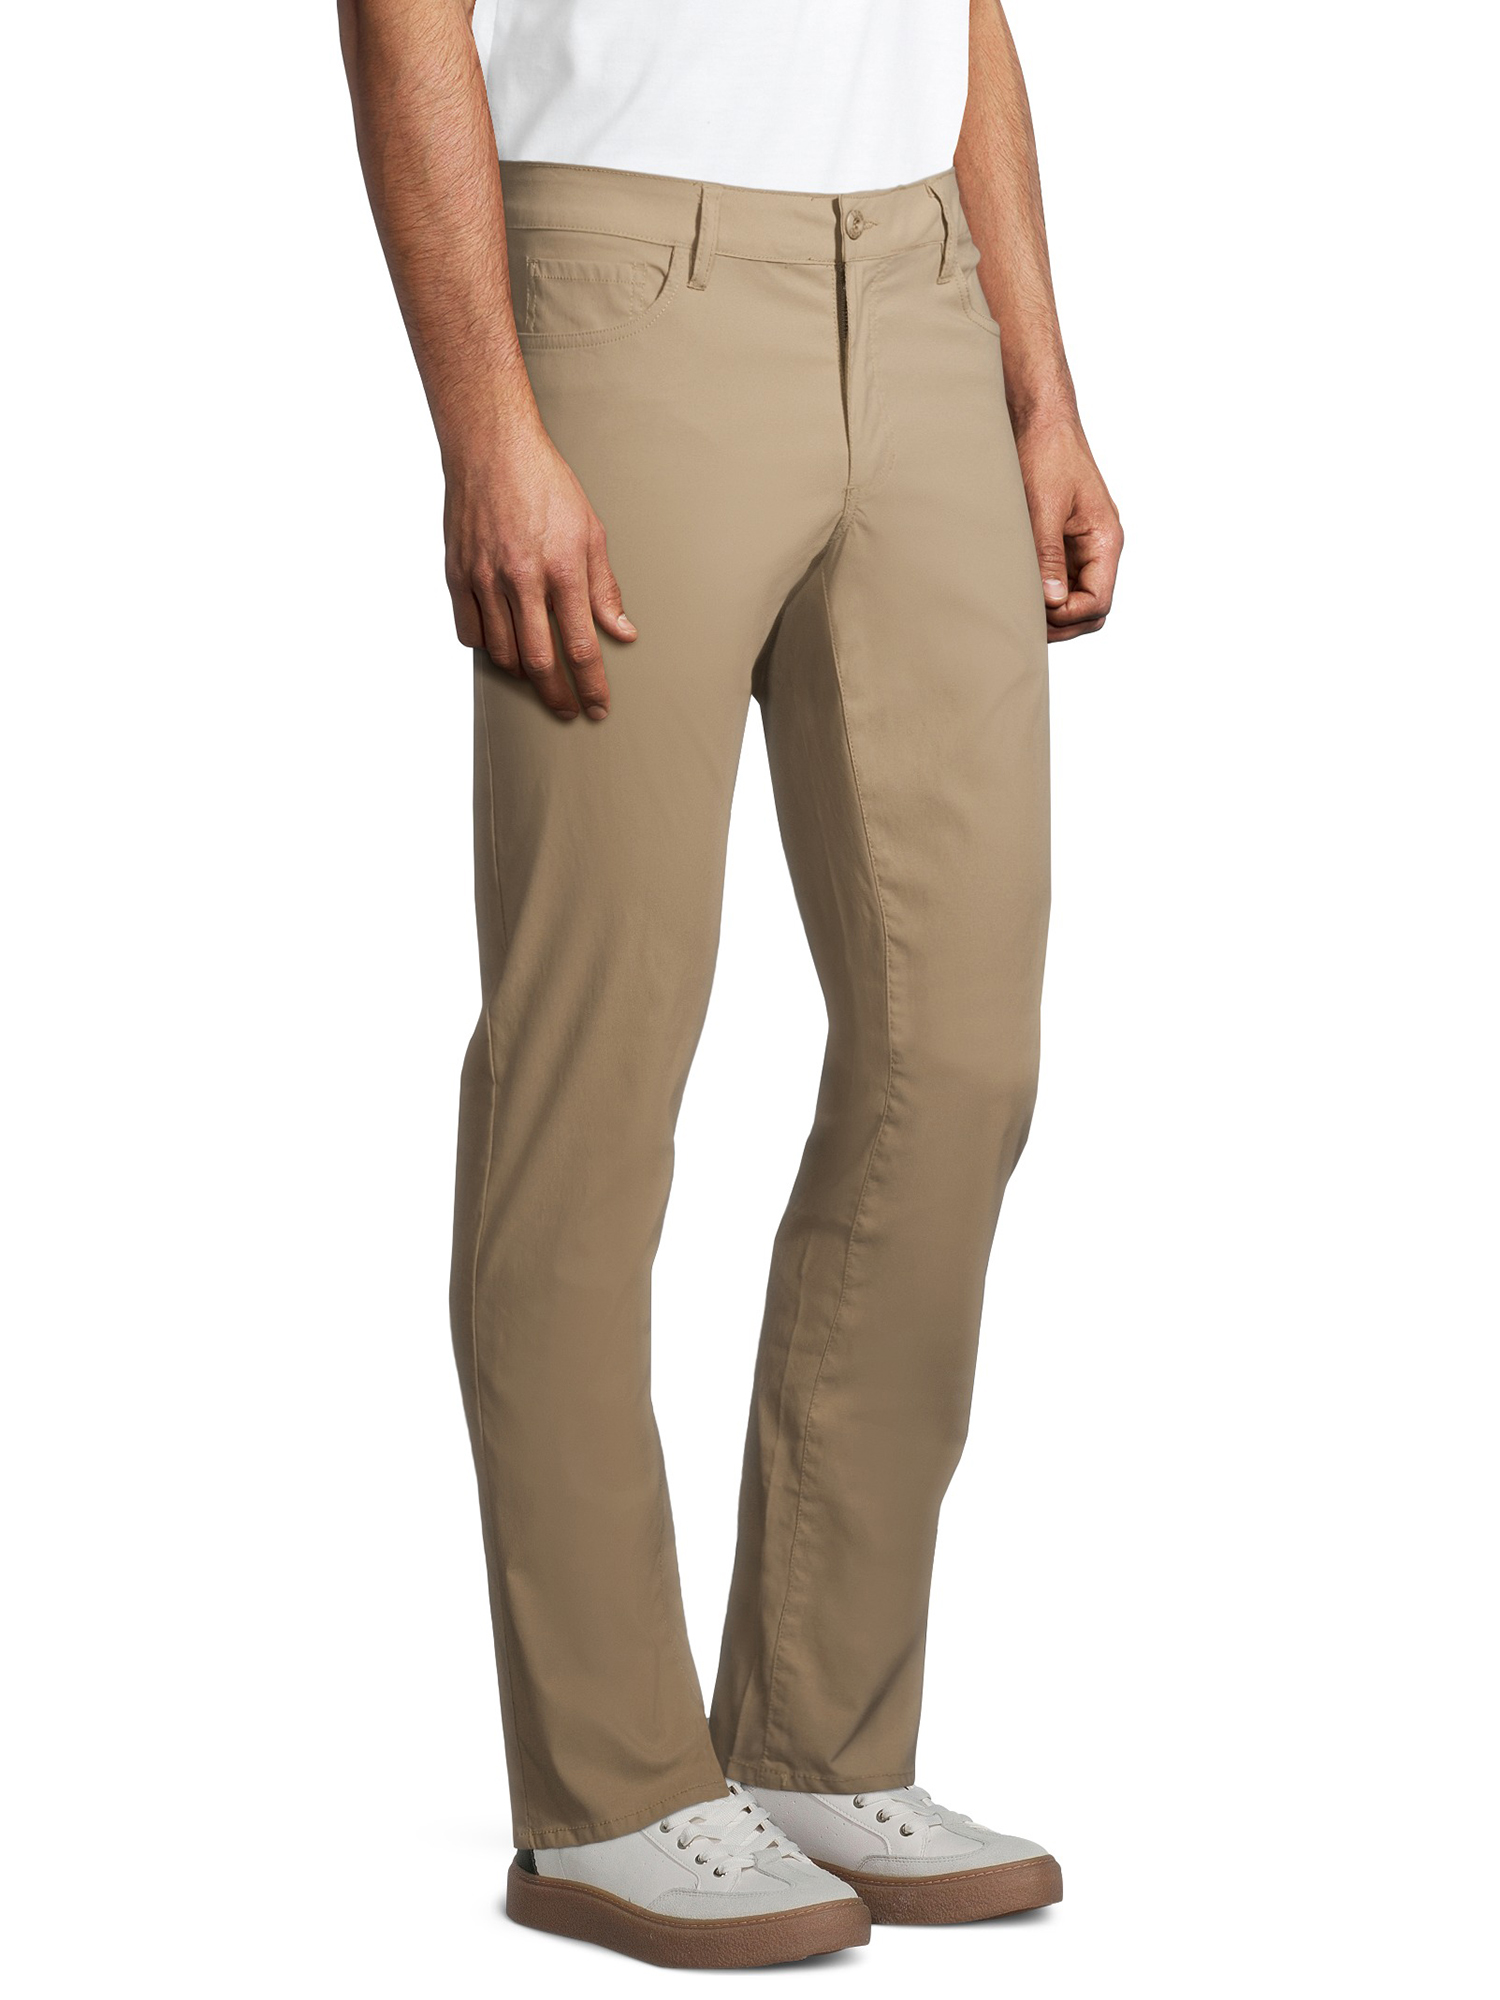 IZOD Men's Slim Straight 5 Pocket Pants - image 3 of 6